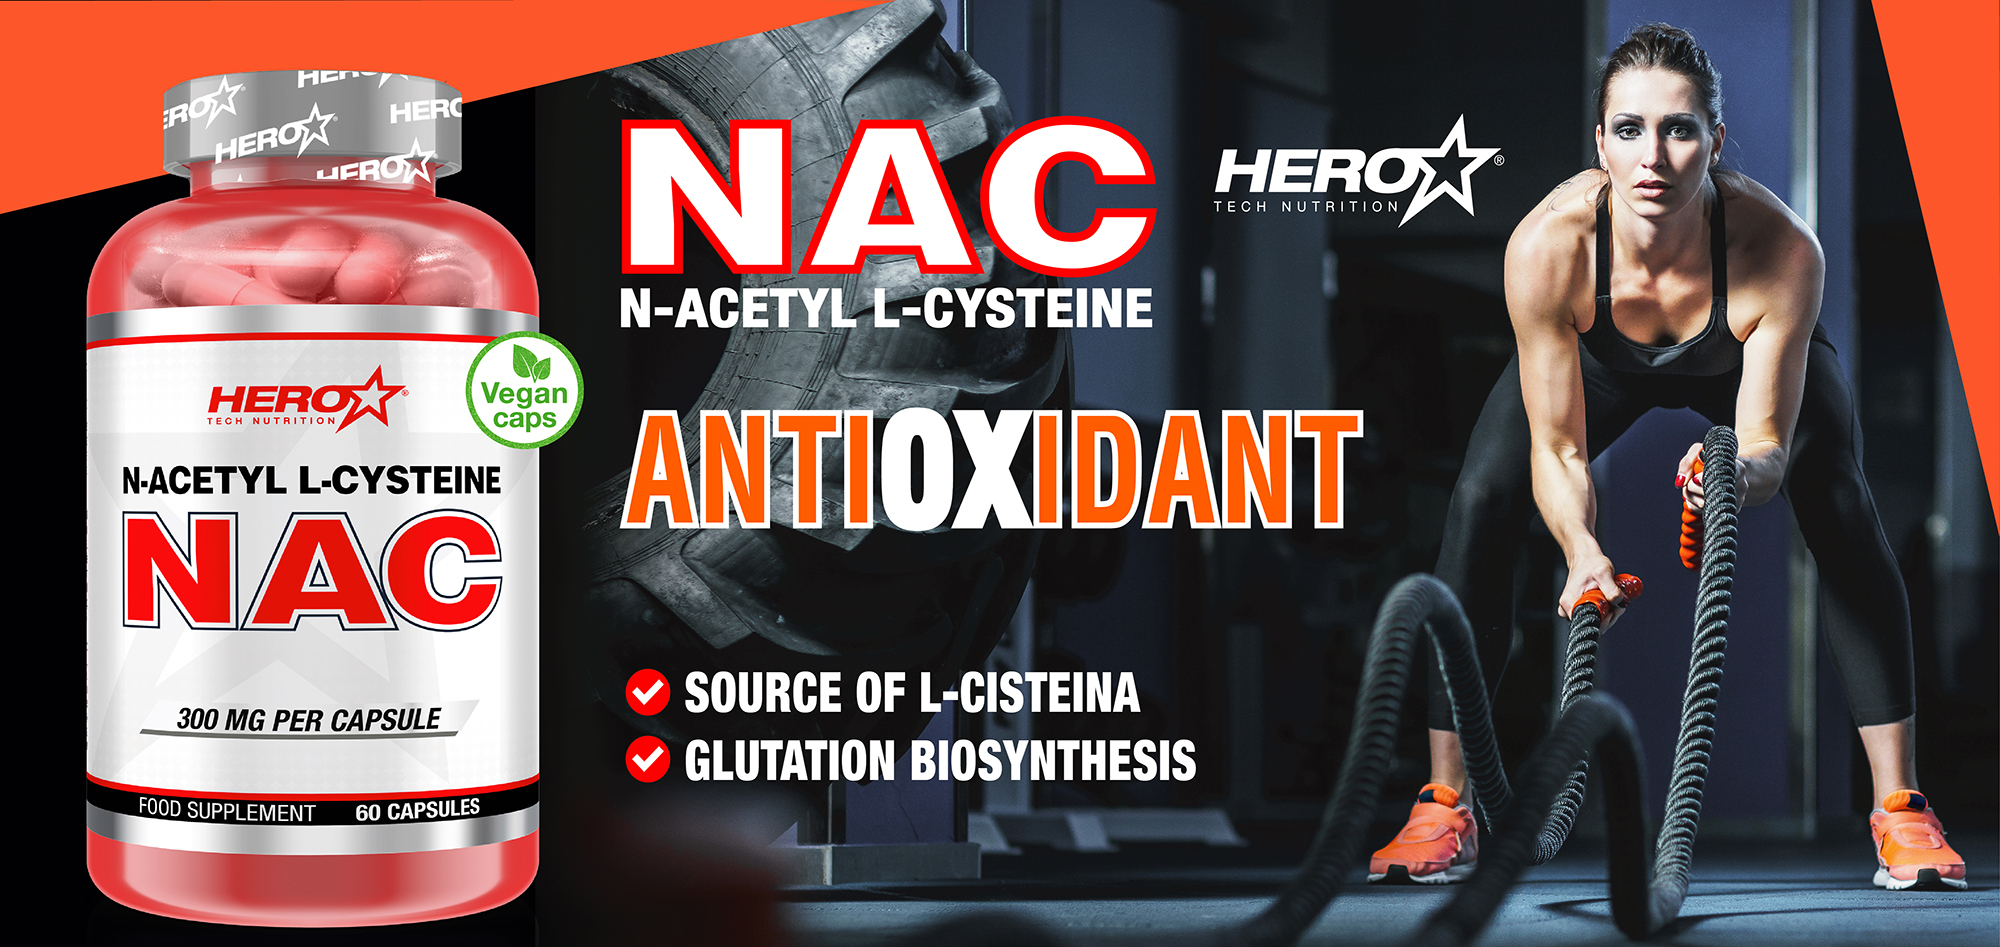 NAC CYSTEINE ANTIOXIDANT HERO TECH NUTRITION